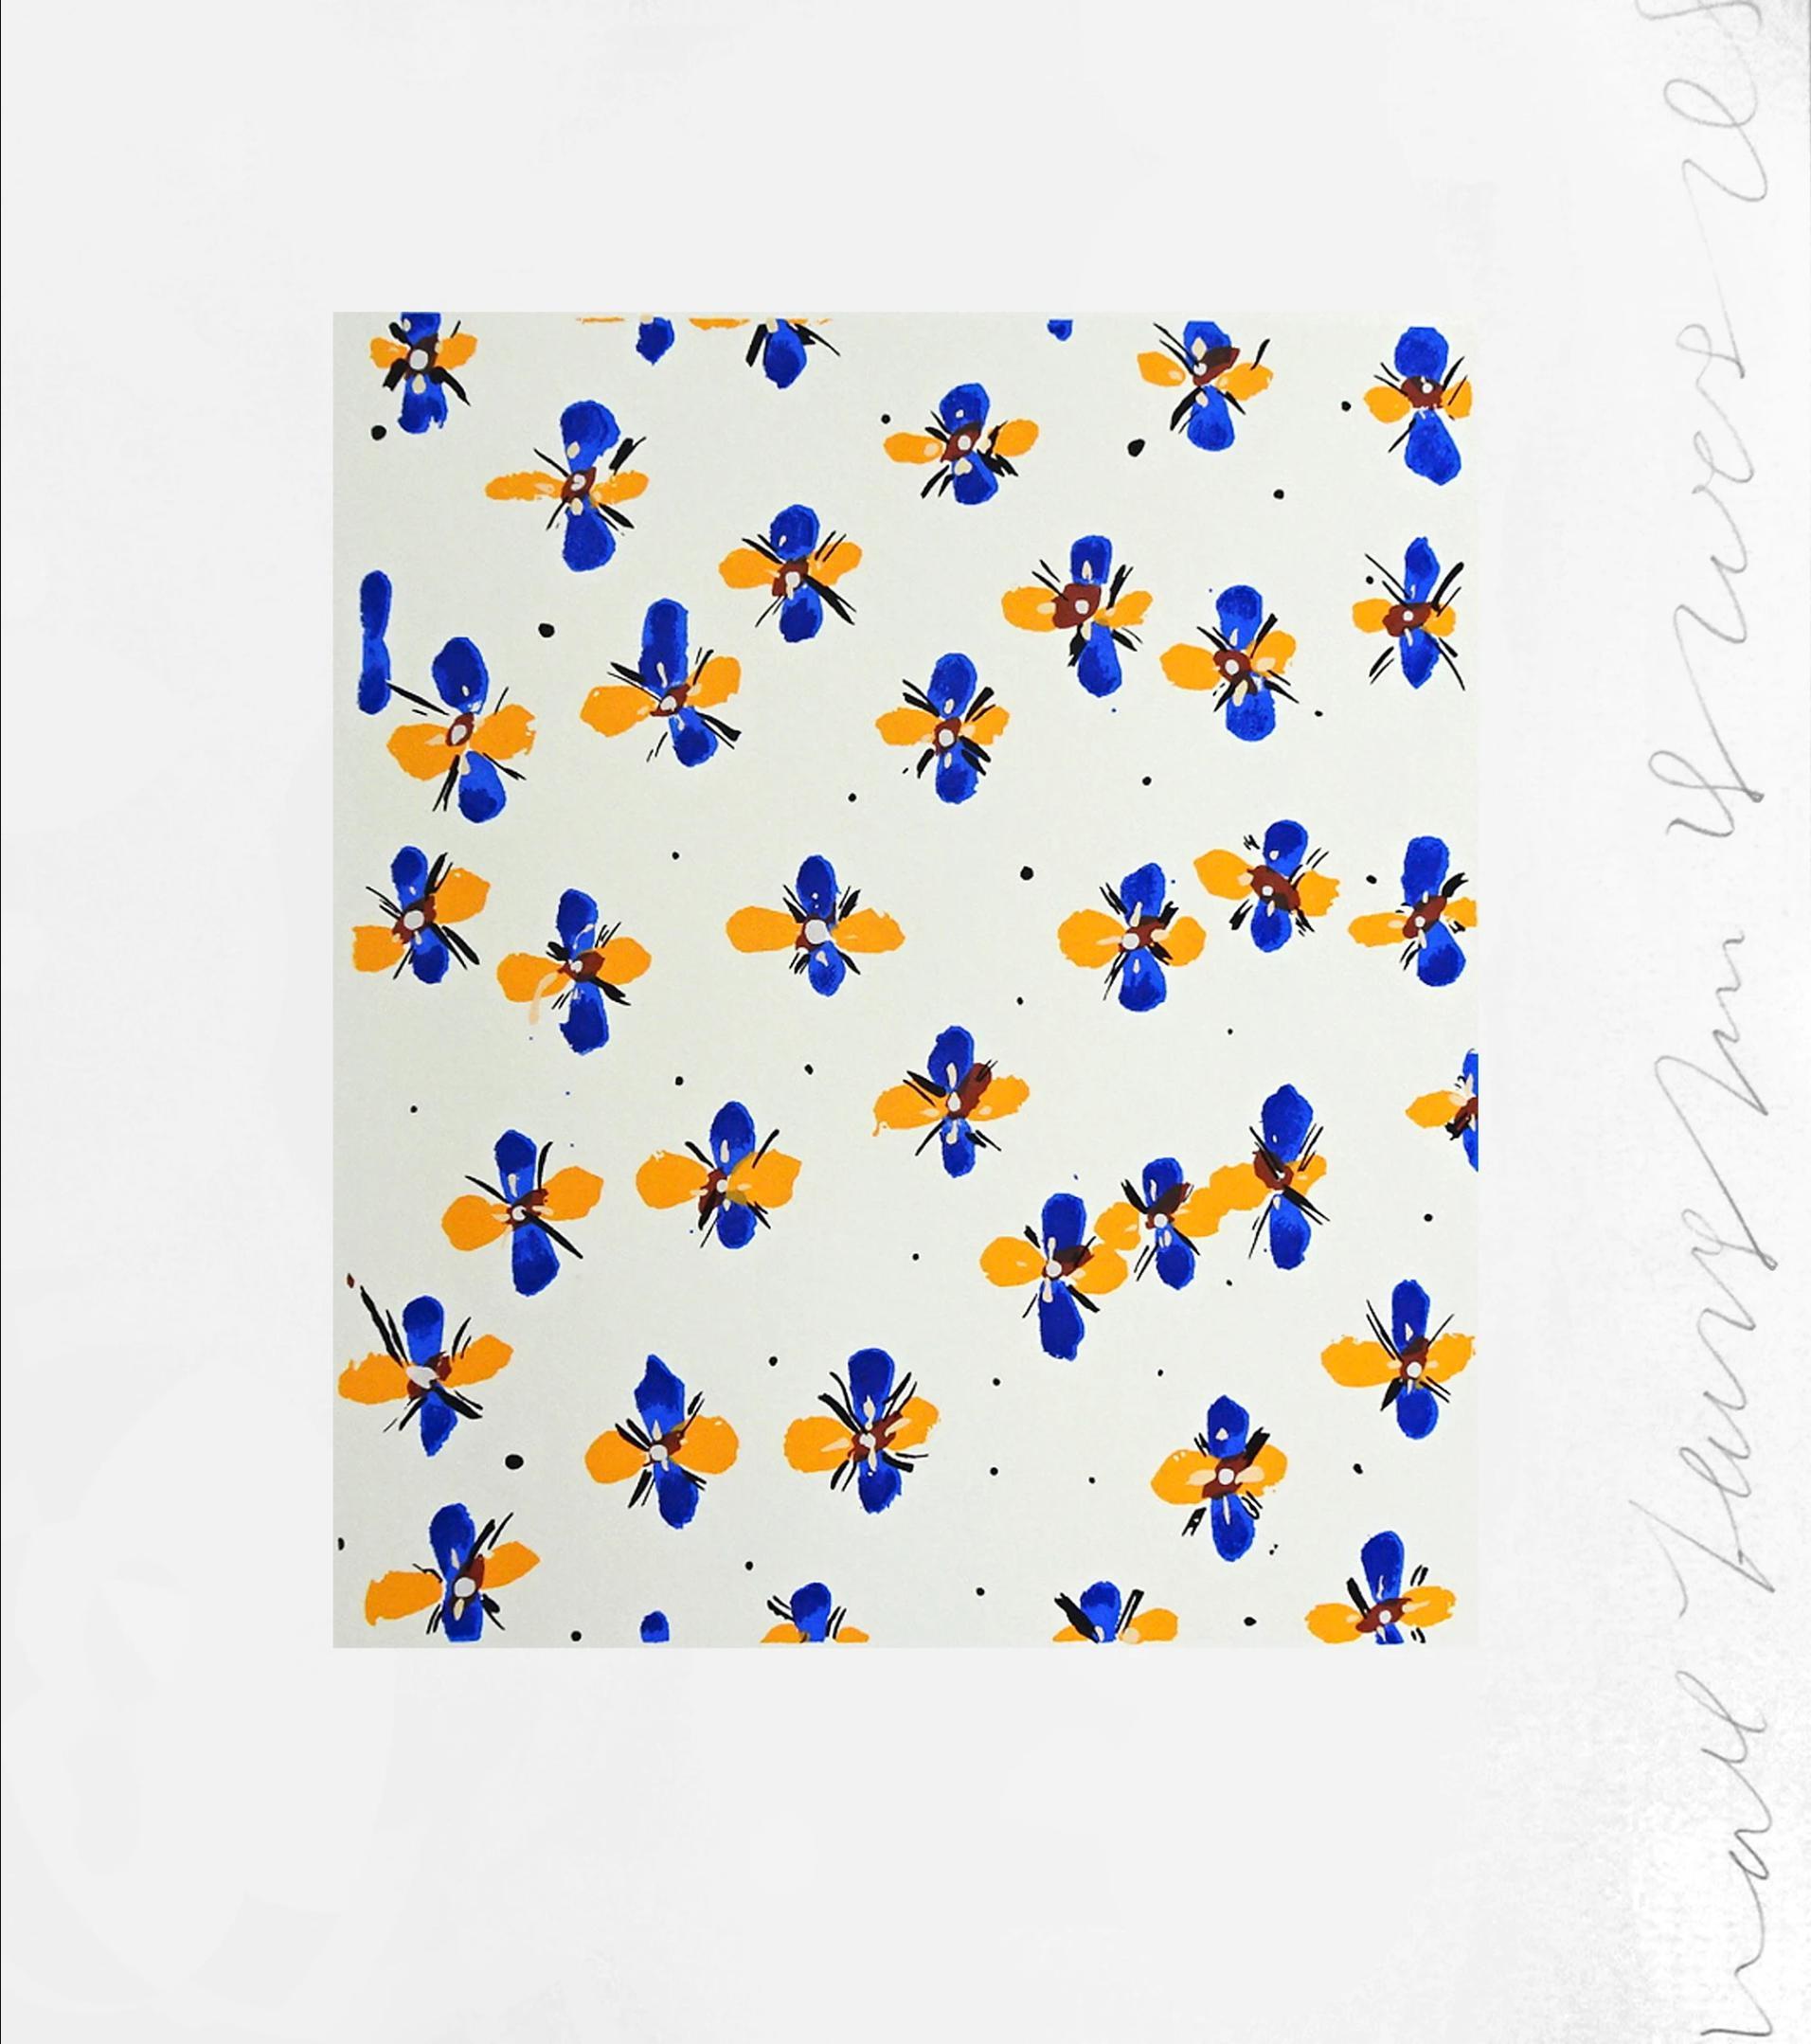 Wallflower 23 - Print by Donald Sultan